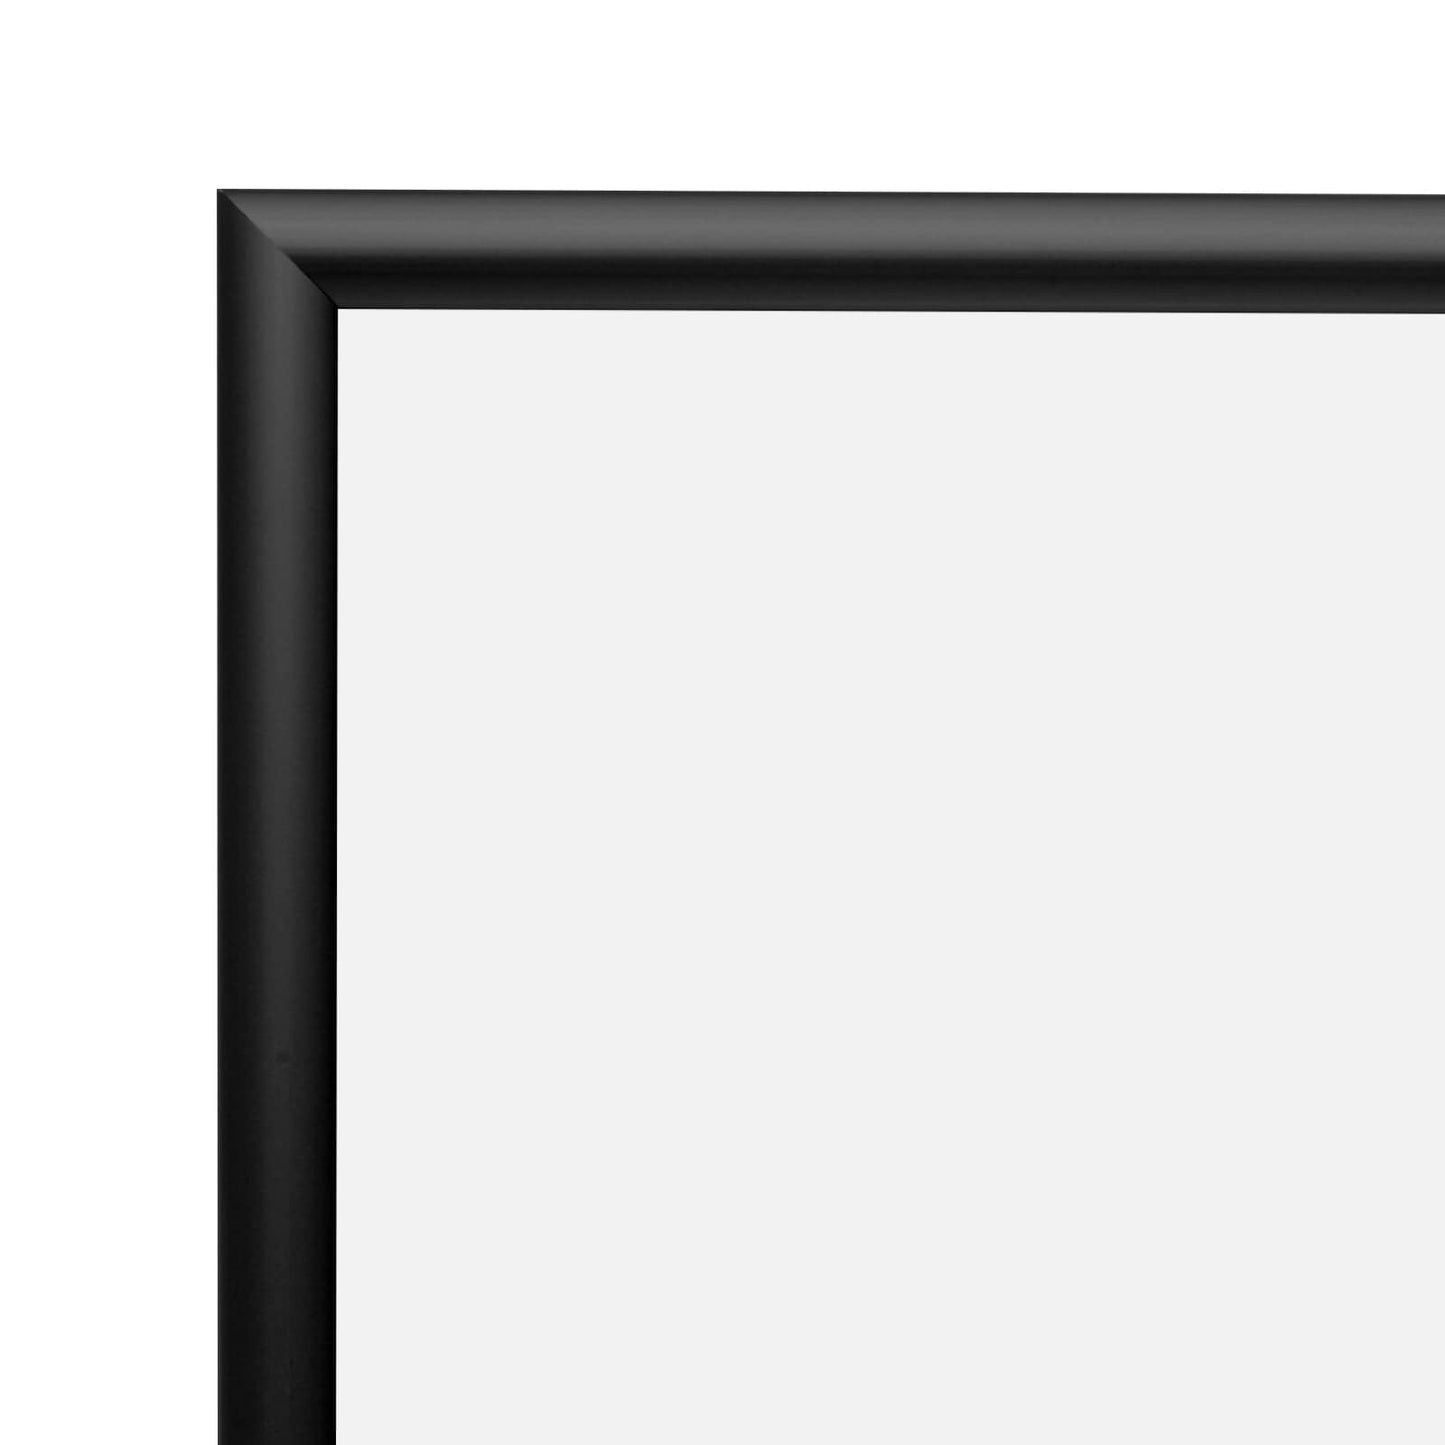 27x40 TRADEframe Black Snap Frame 27x40 - 1 inch profile - Snap Frames Direct